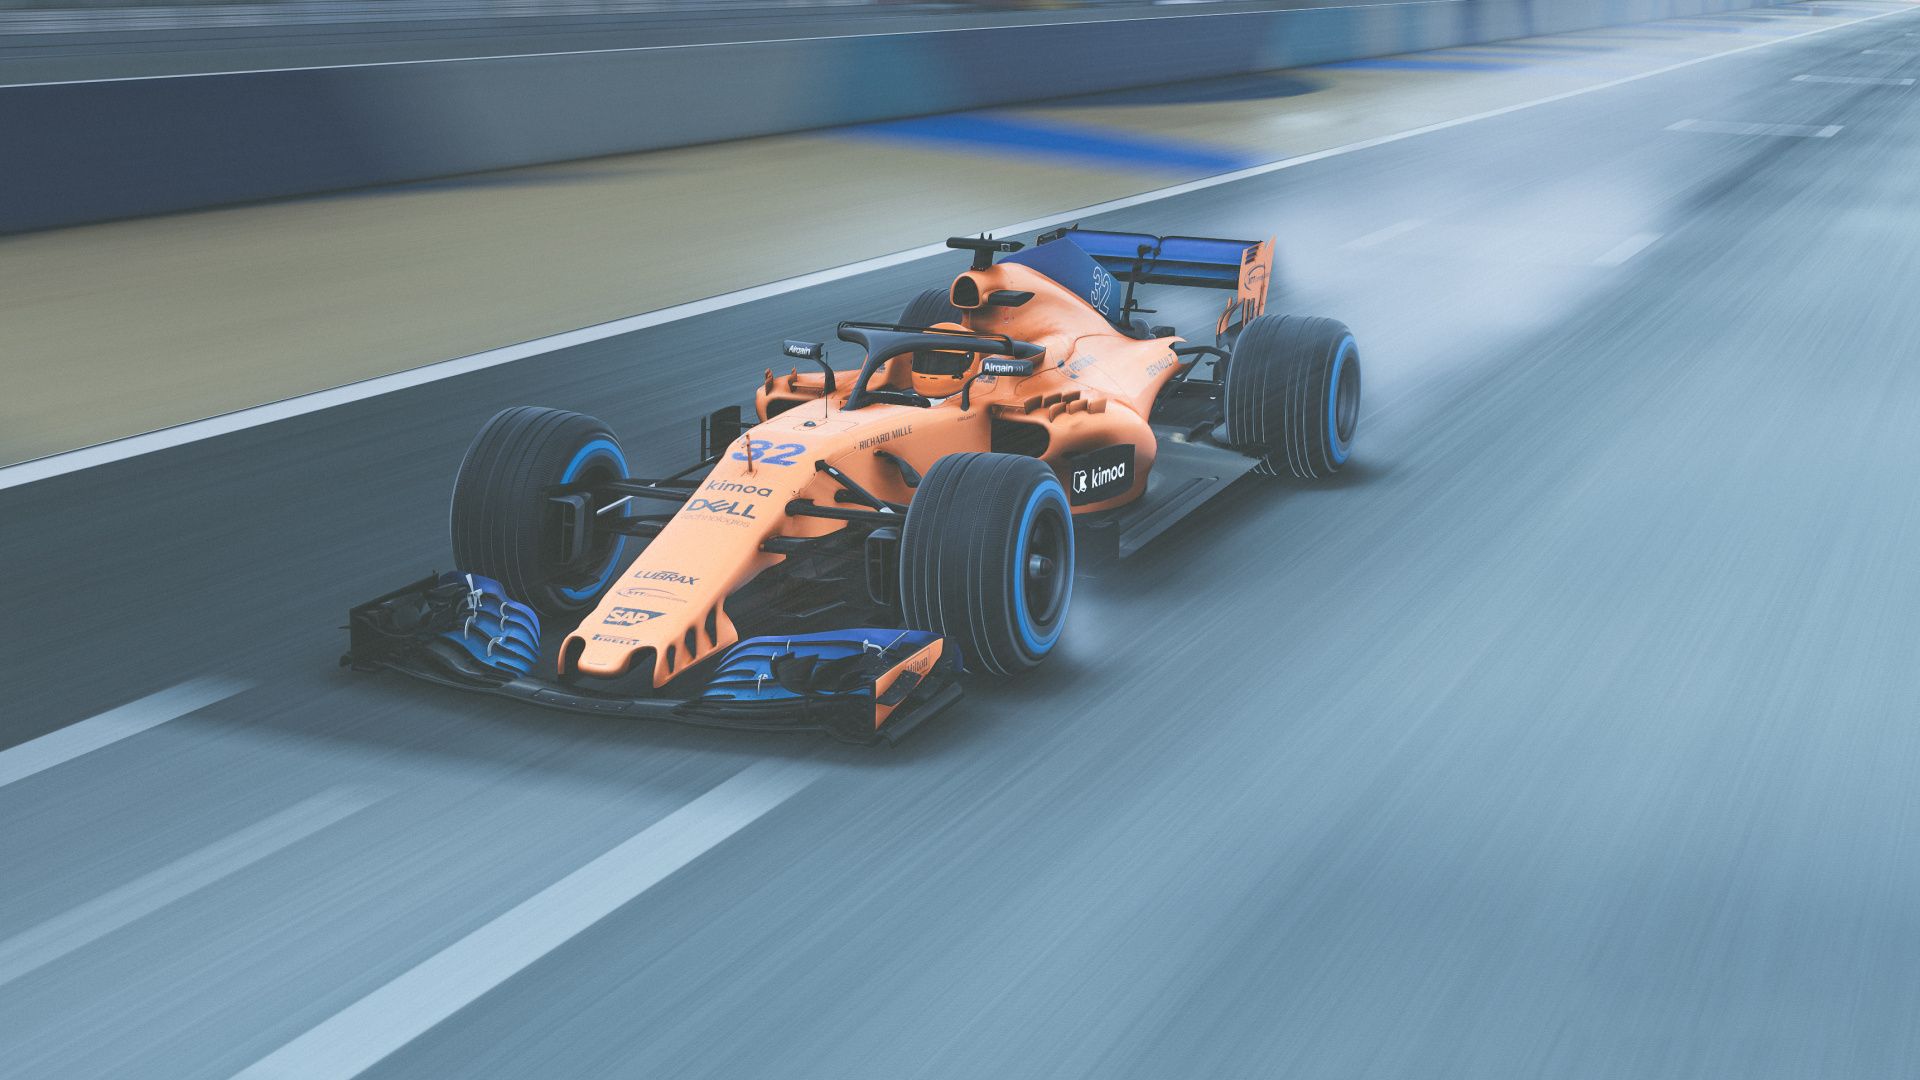 Download Race track, video game, McLaren, formula one, F1 2018 wallpaper, 1920x Full HD, HDTV, FHD, 1080p